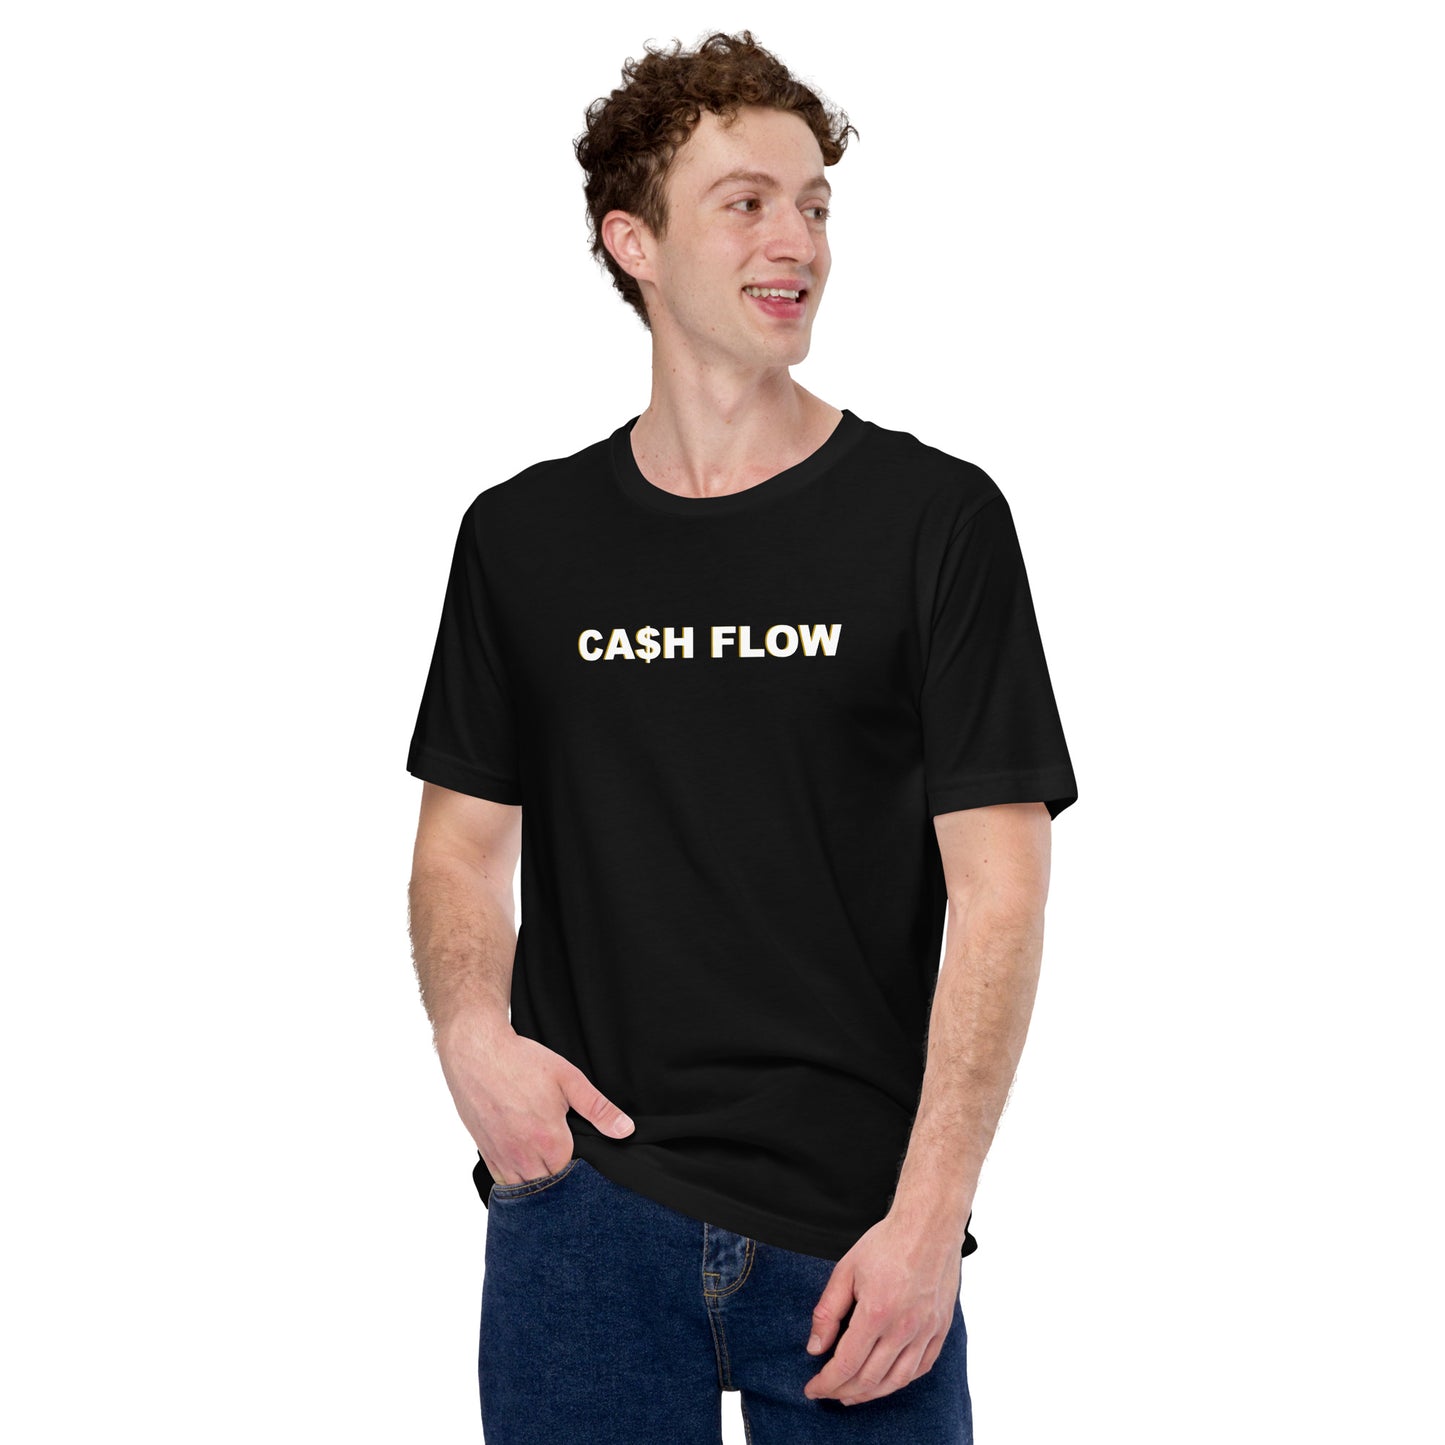 CA$H FLOW - White Text - Gold Edge - T-Shirt